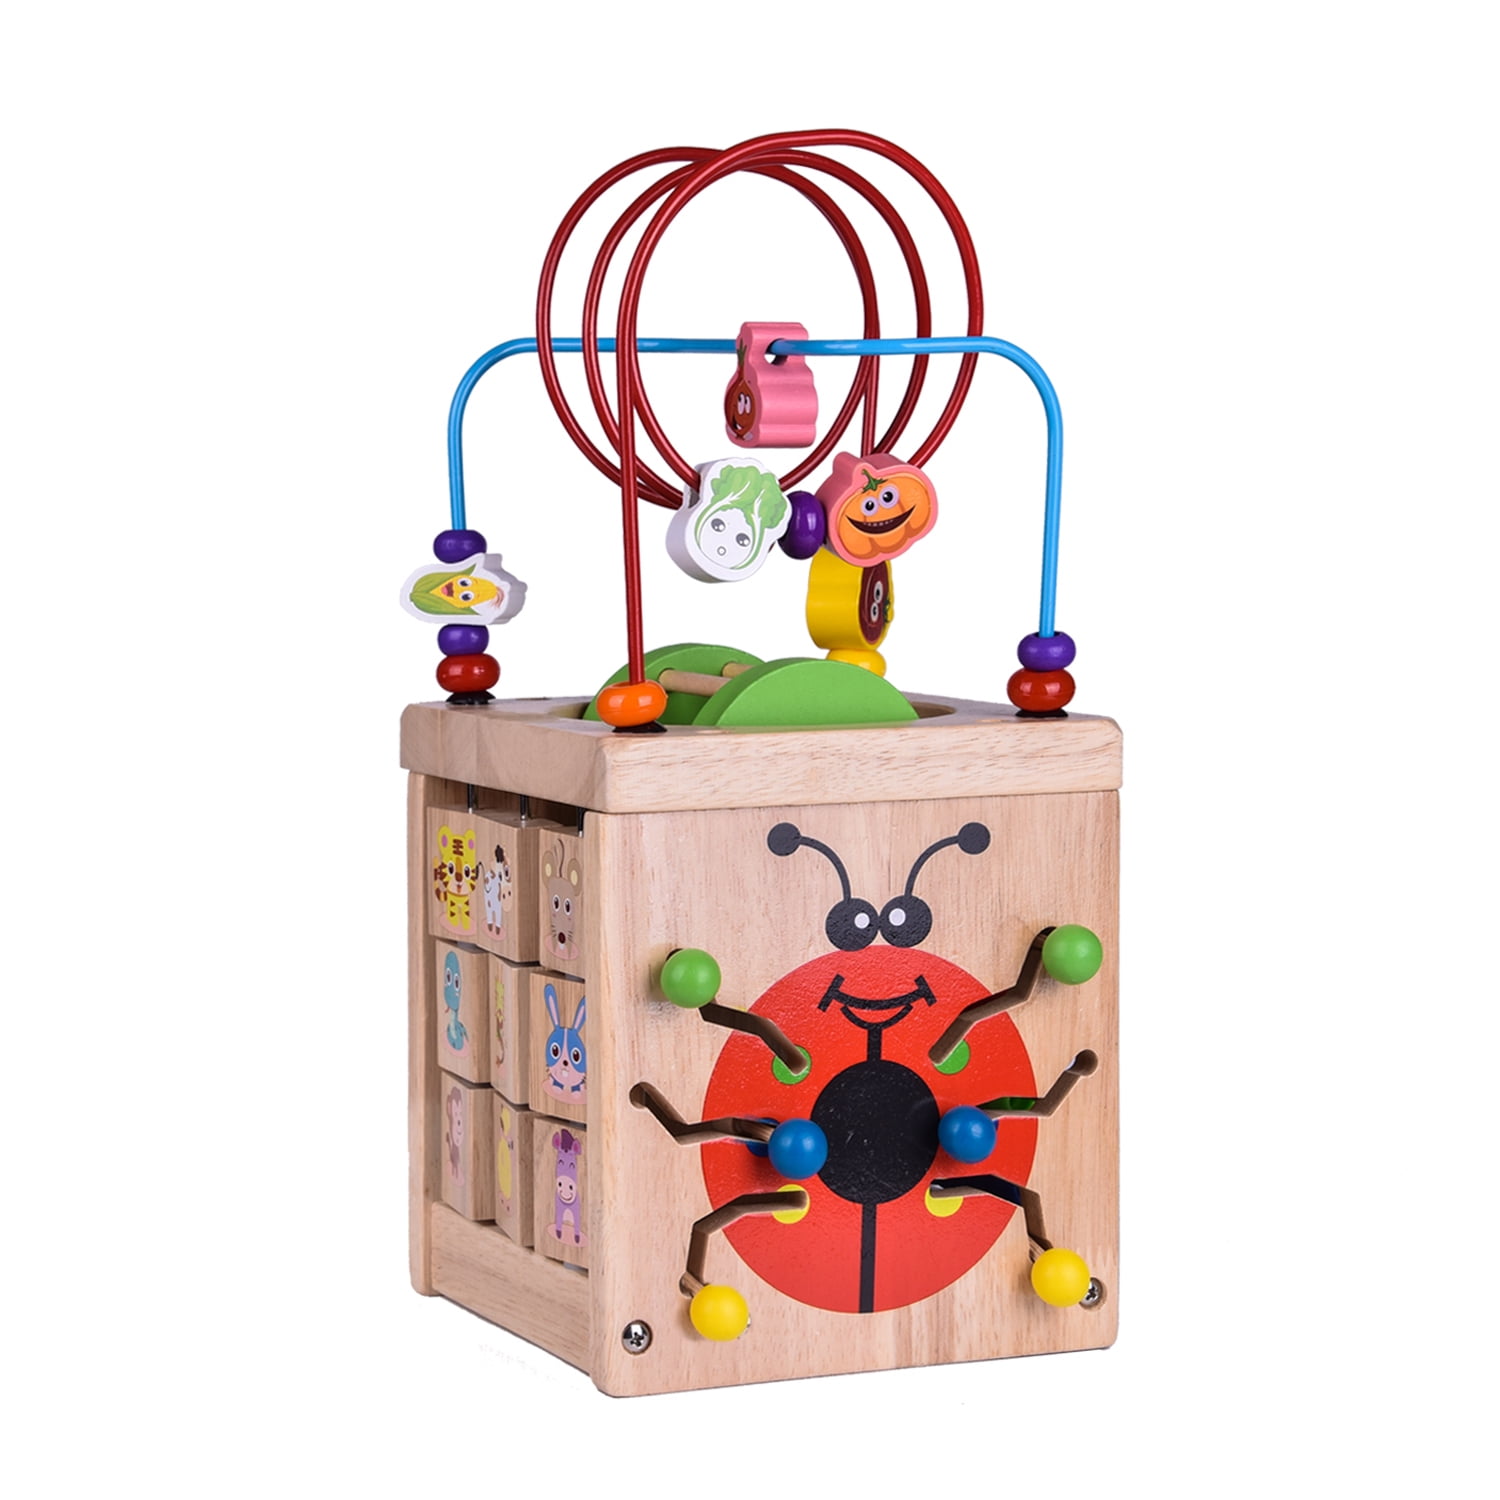 Educo Wooden Maze Roller Coaster Toy Activity Center Child Developmental Toy 